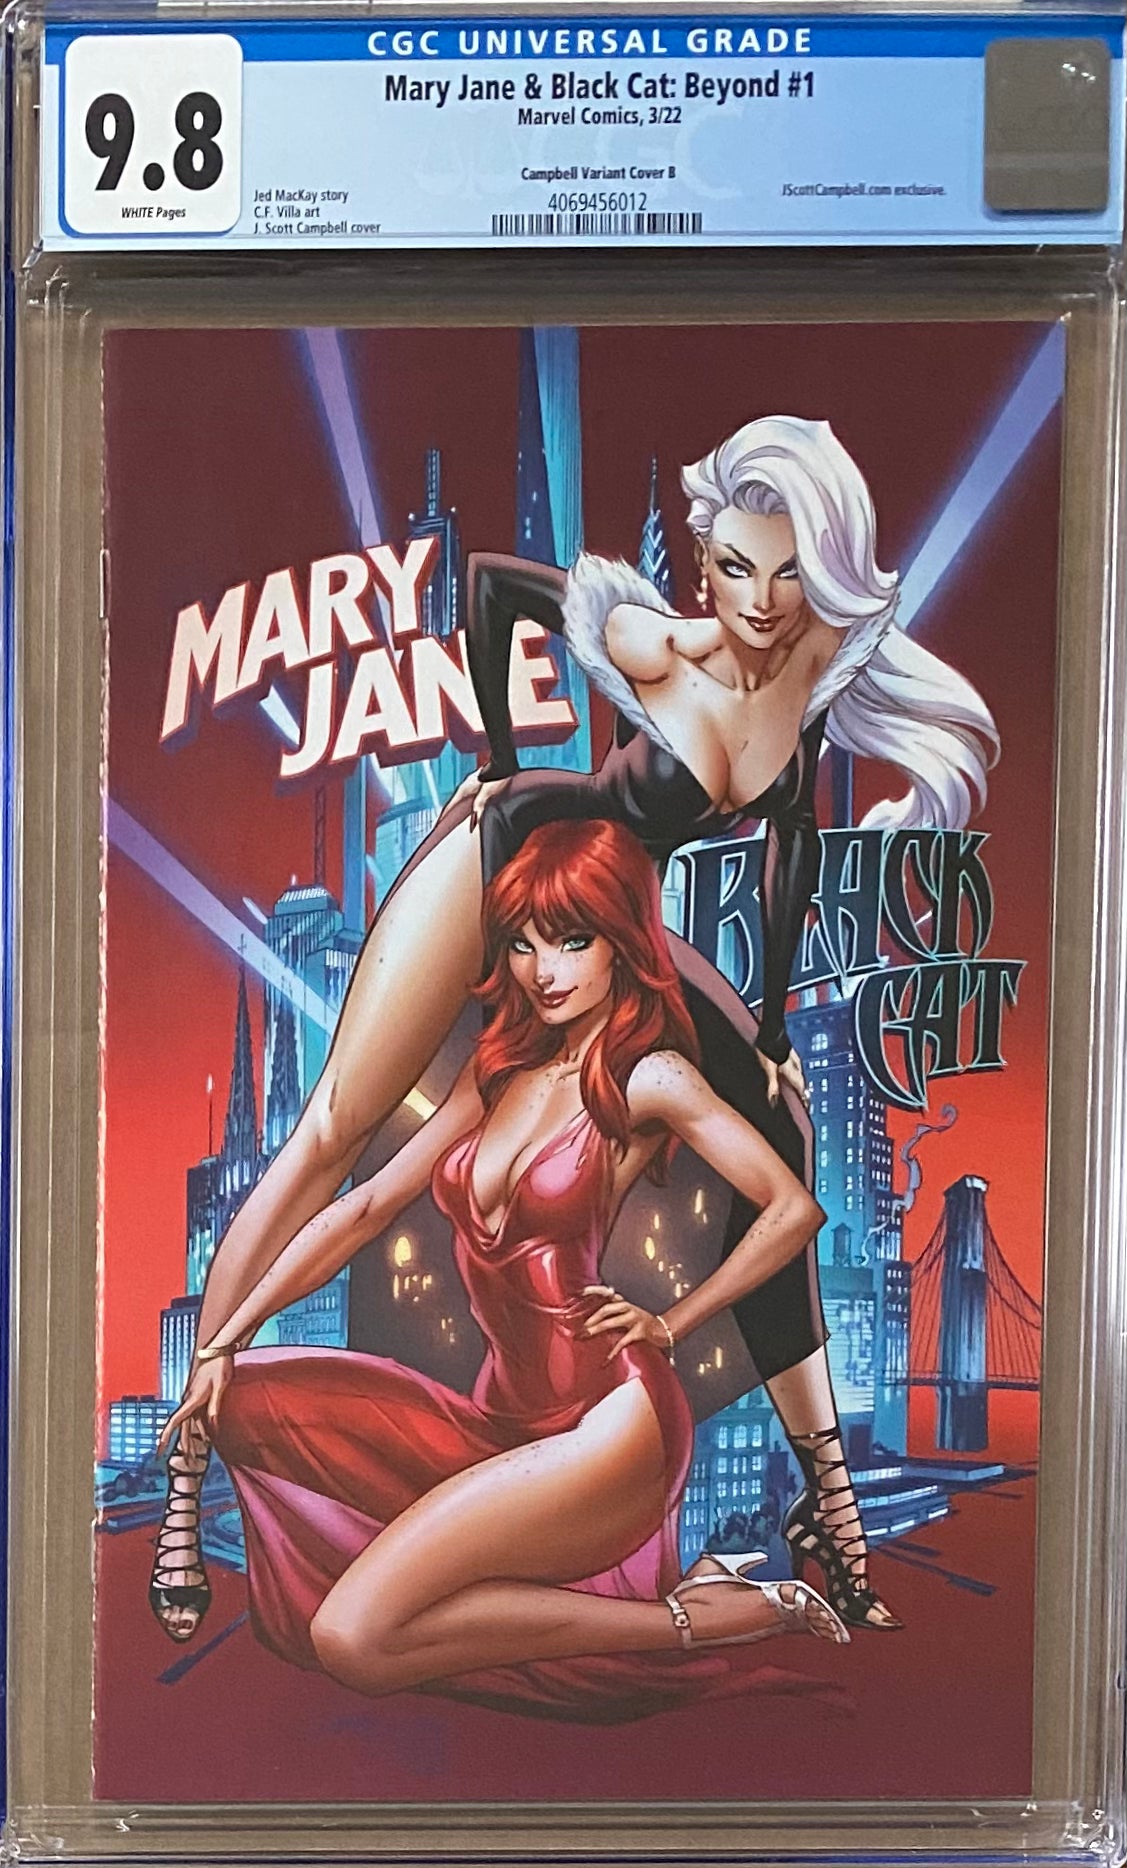 Mary Jane & Black Cat: Beyond #1 J. Scott Campbell Edition B "Ladies' Night" CGC 9.8